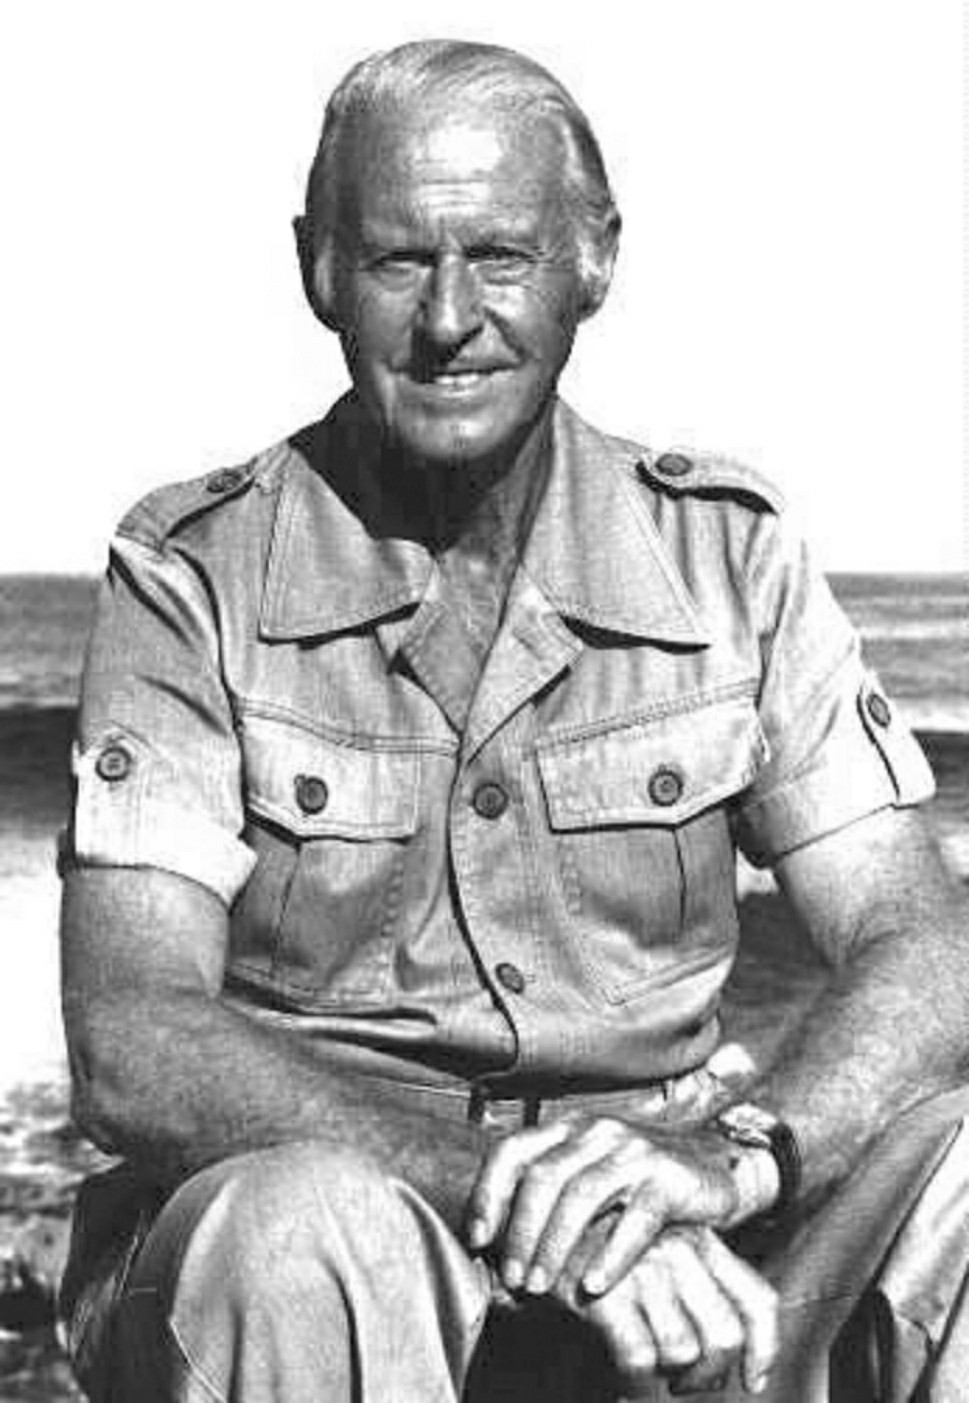 Portrét Thora Heyerdahla jako dospělého průzkumníka.